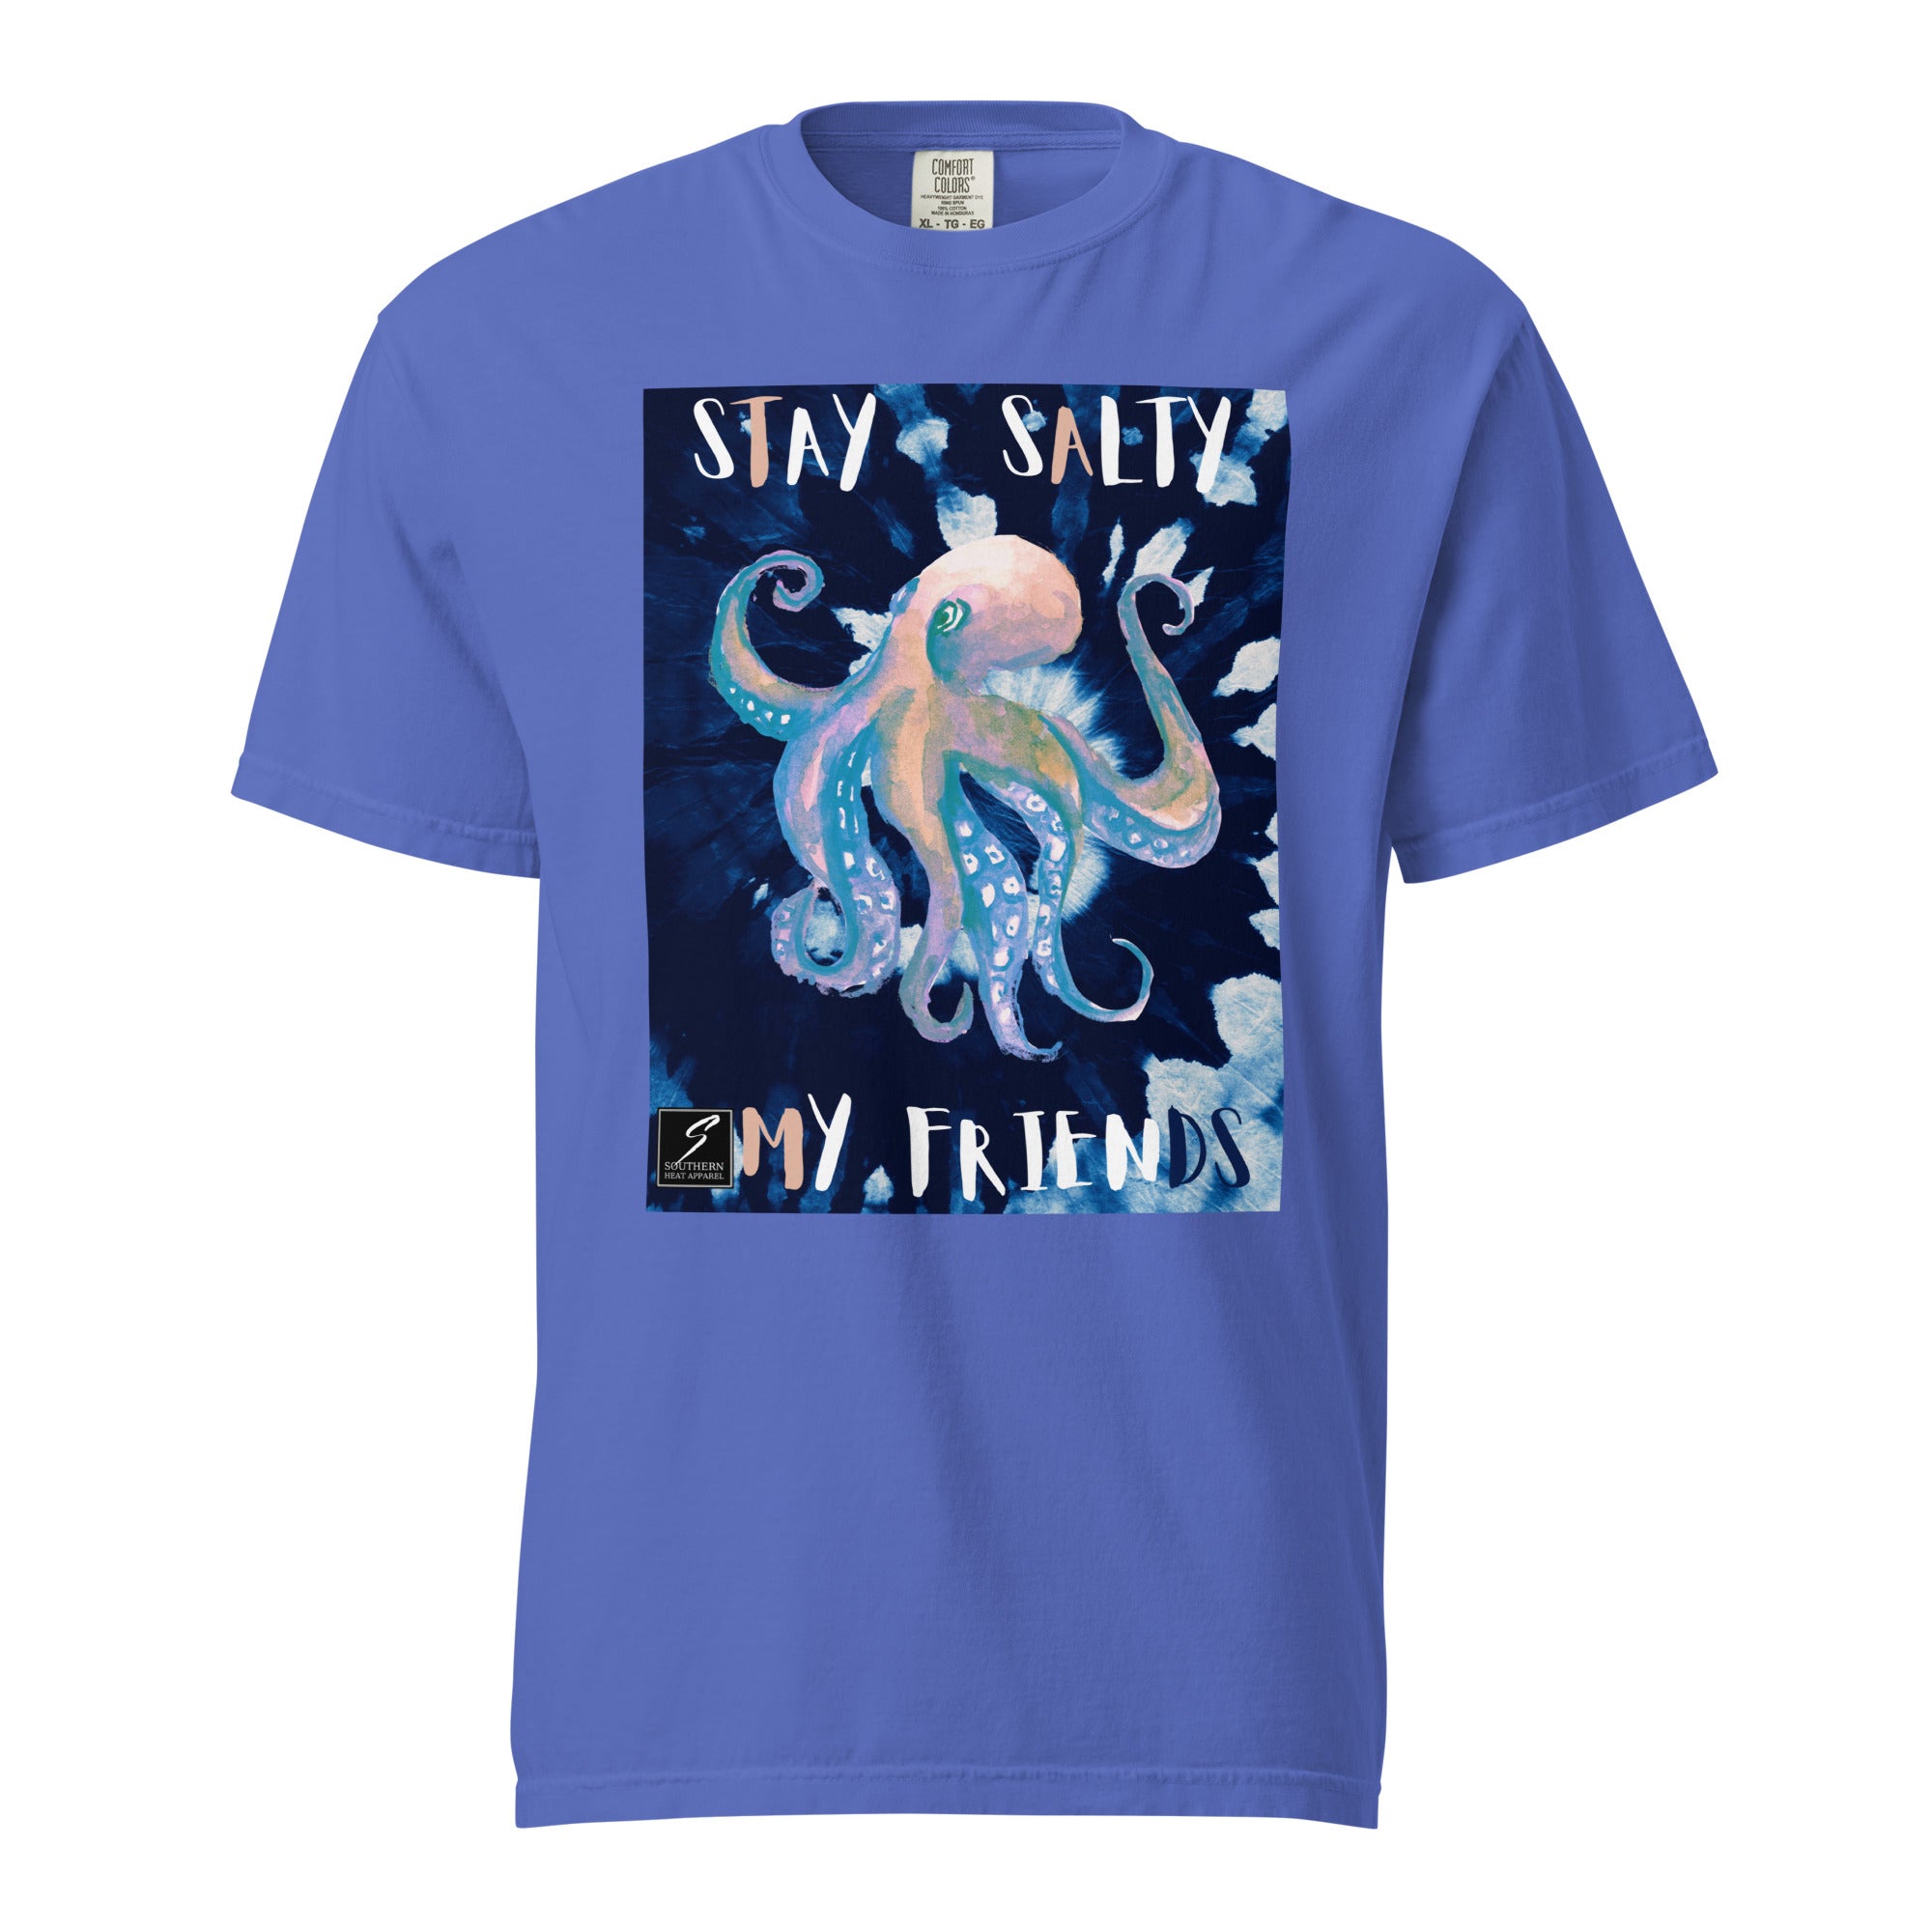 Stay salty-Men's garment-dyed heavyweight t-shirt